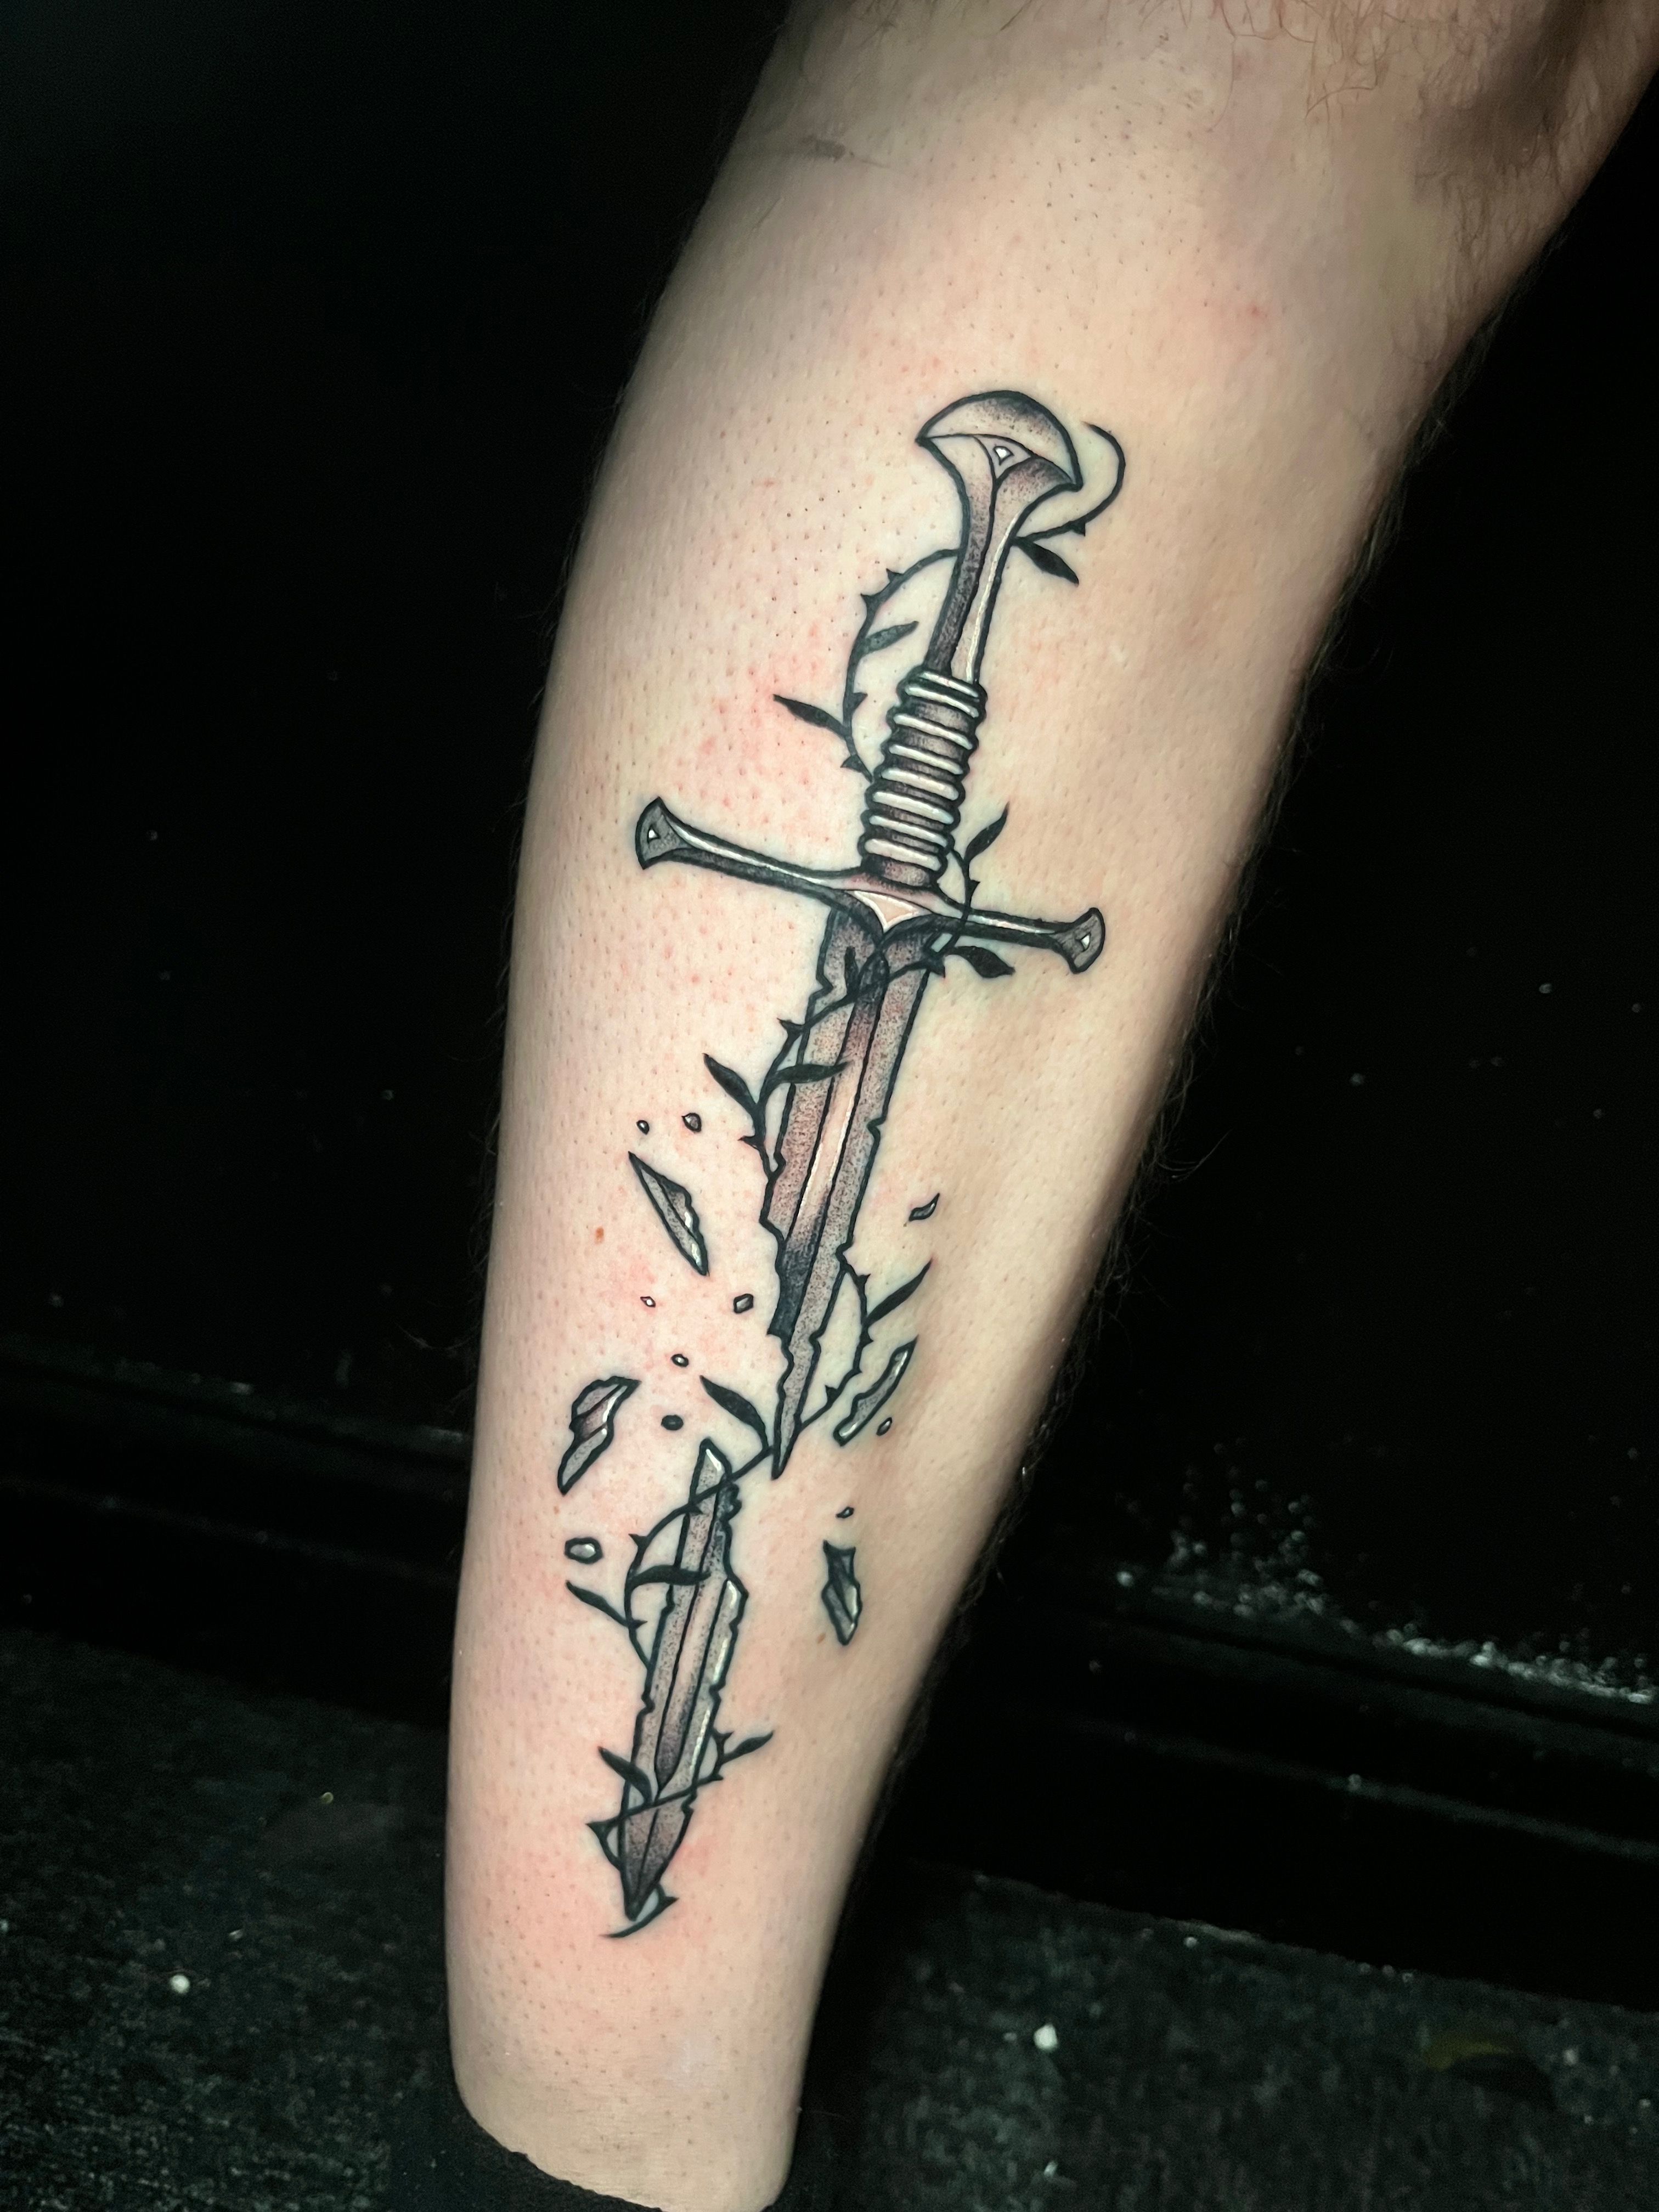 Broken sword tattoo located on the inner arm,